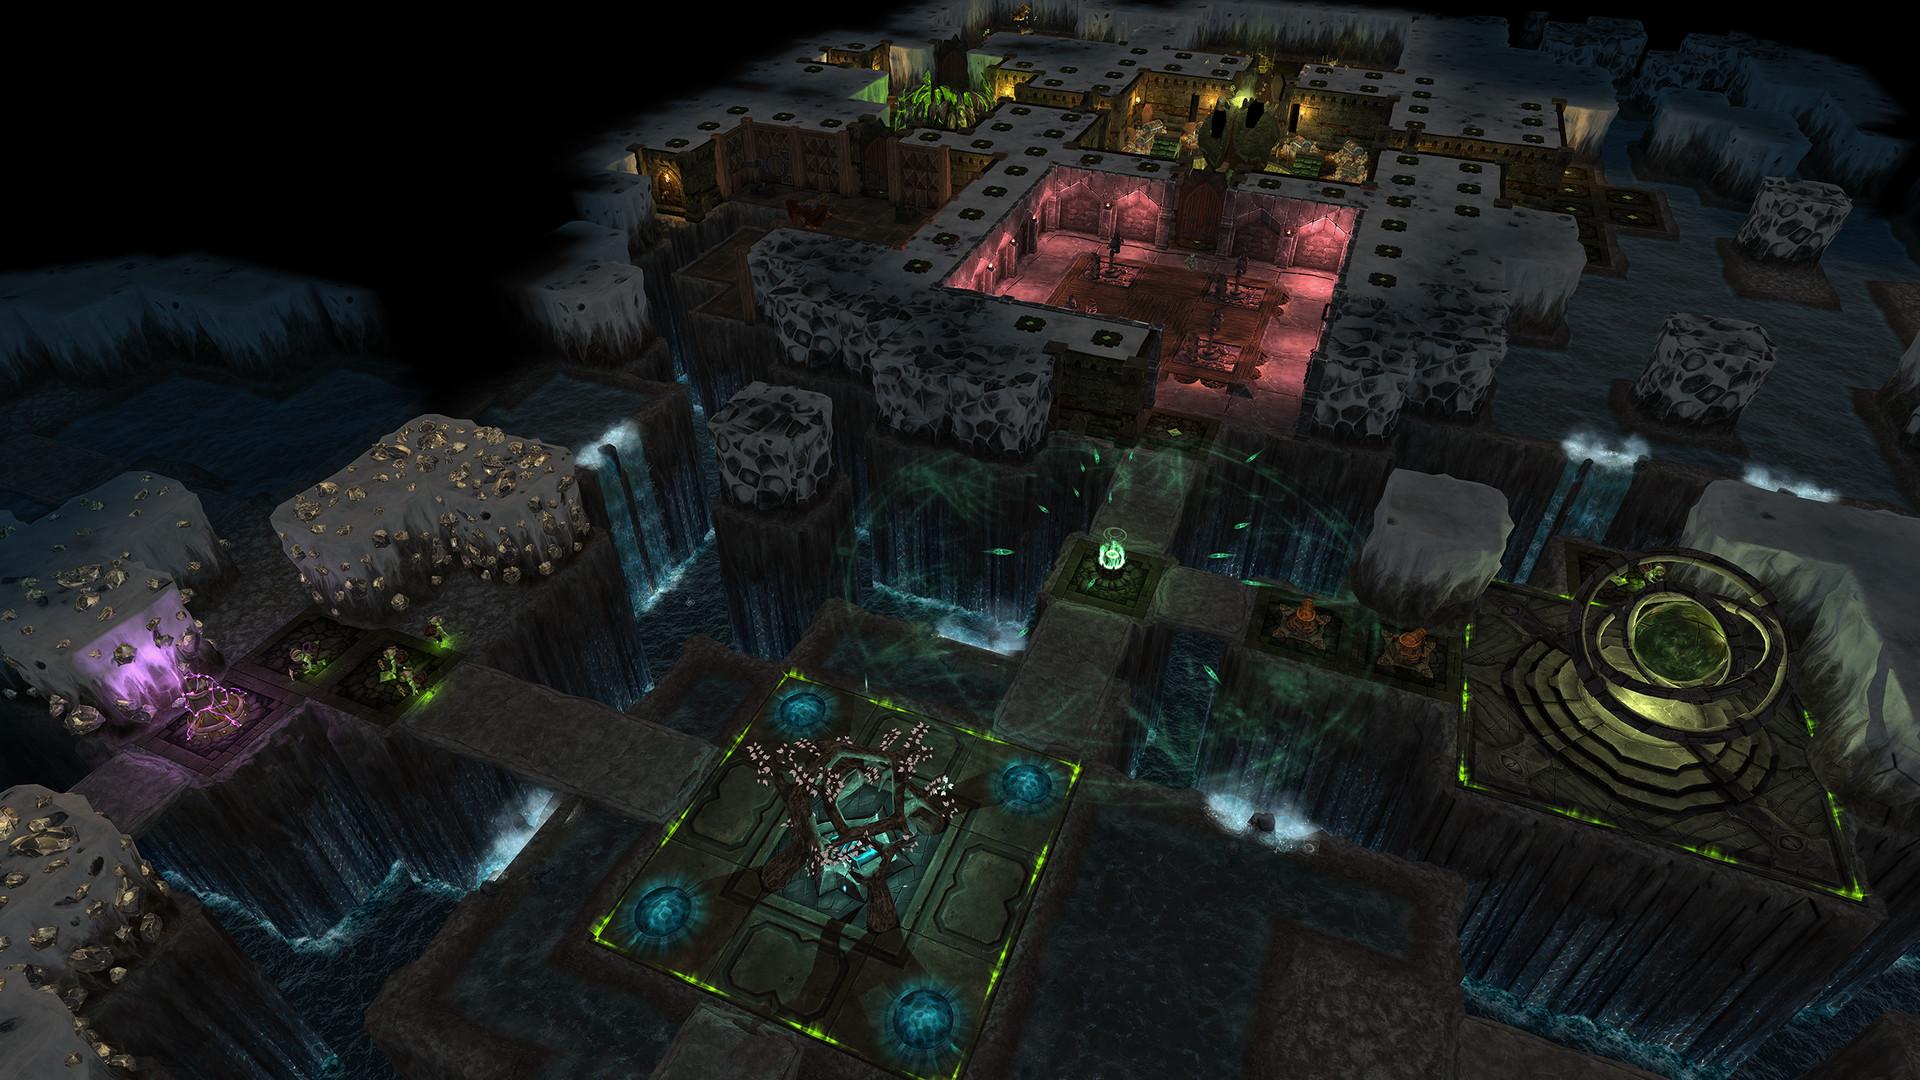 Screenshot №5 from game War for the Overworld